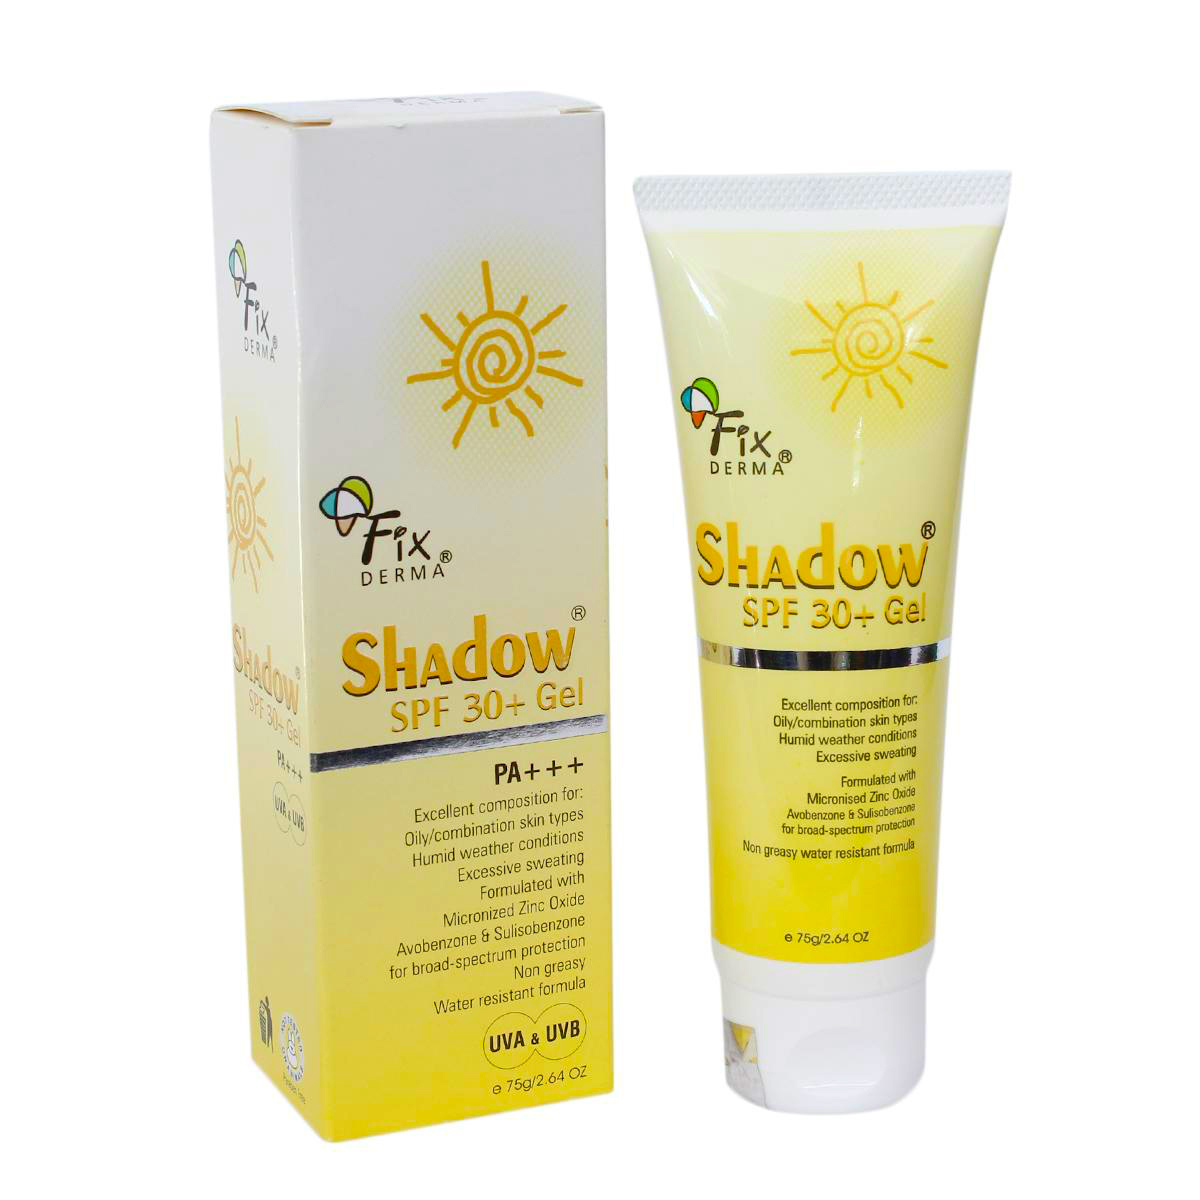 Fixderma shadow spf 30+ gel